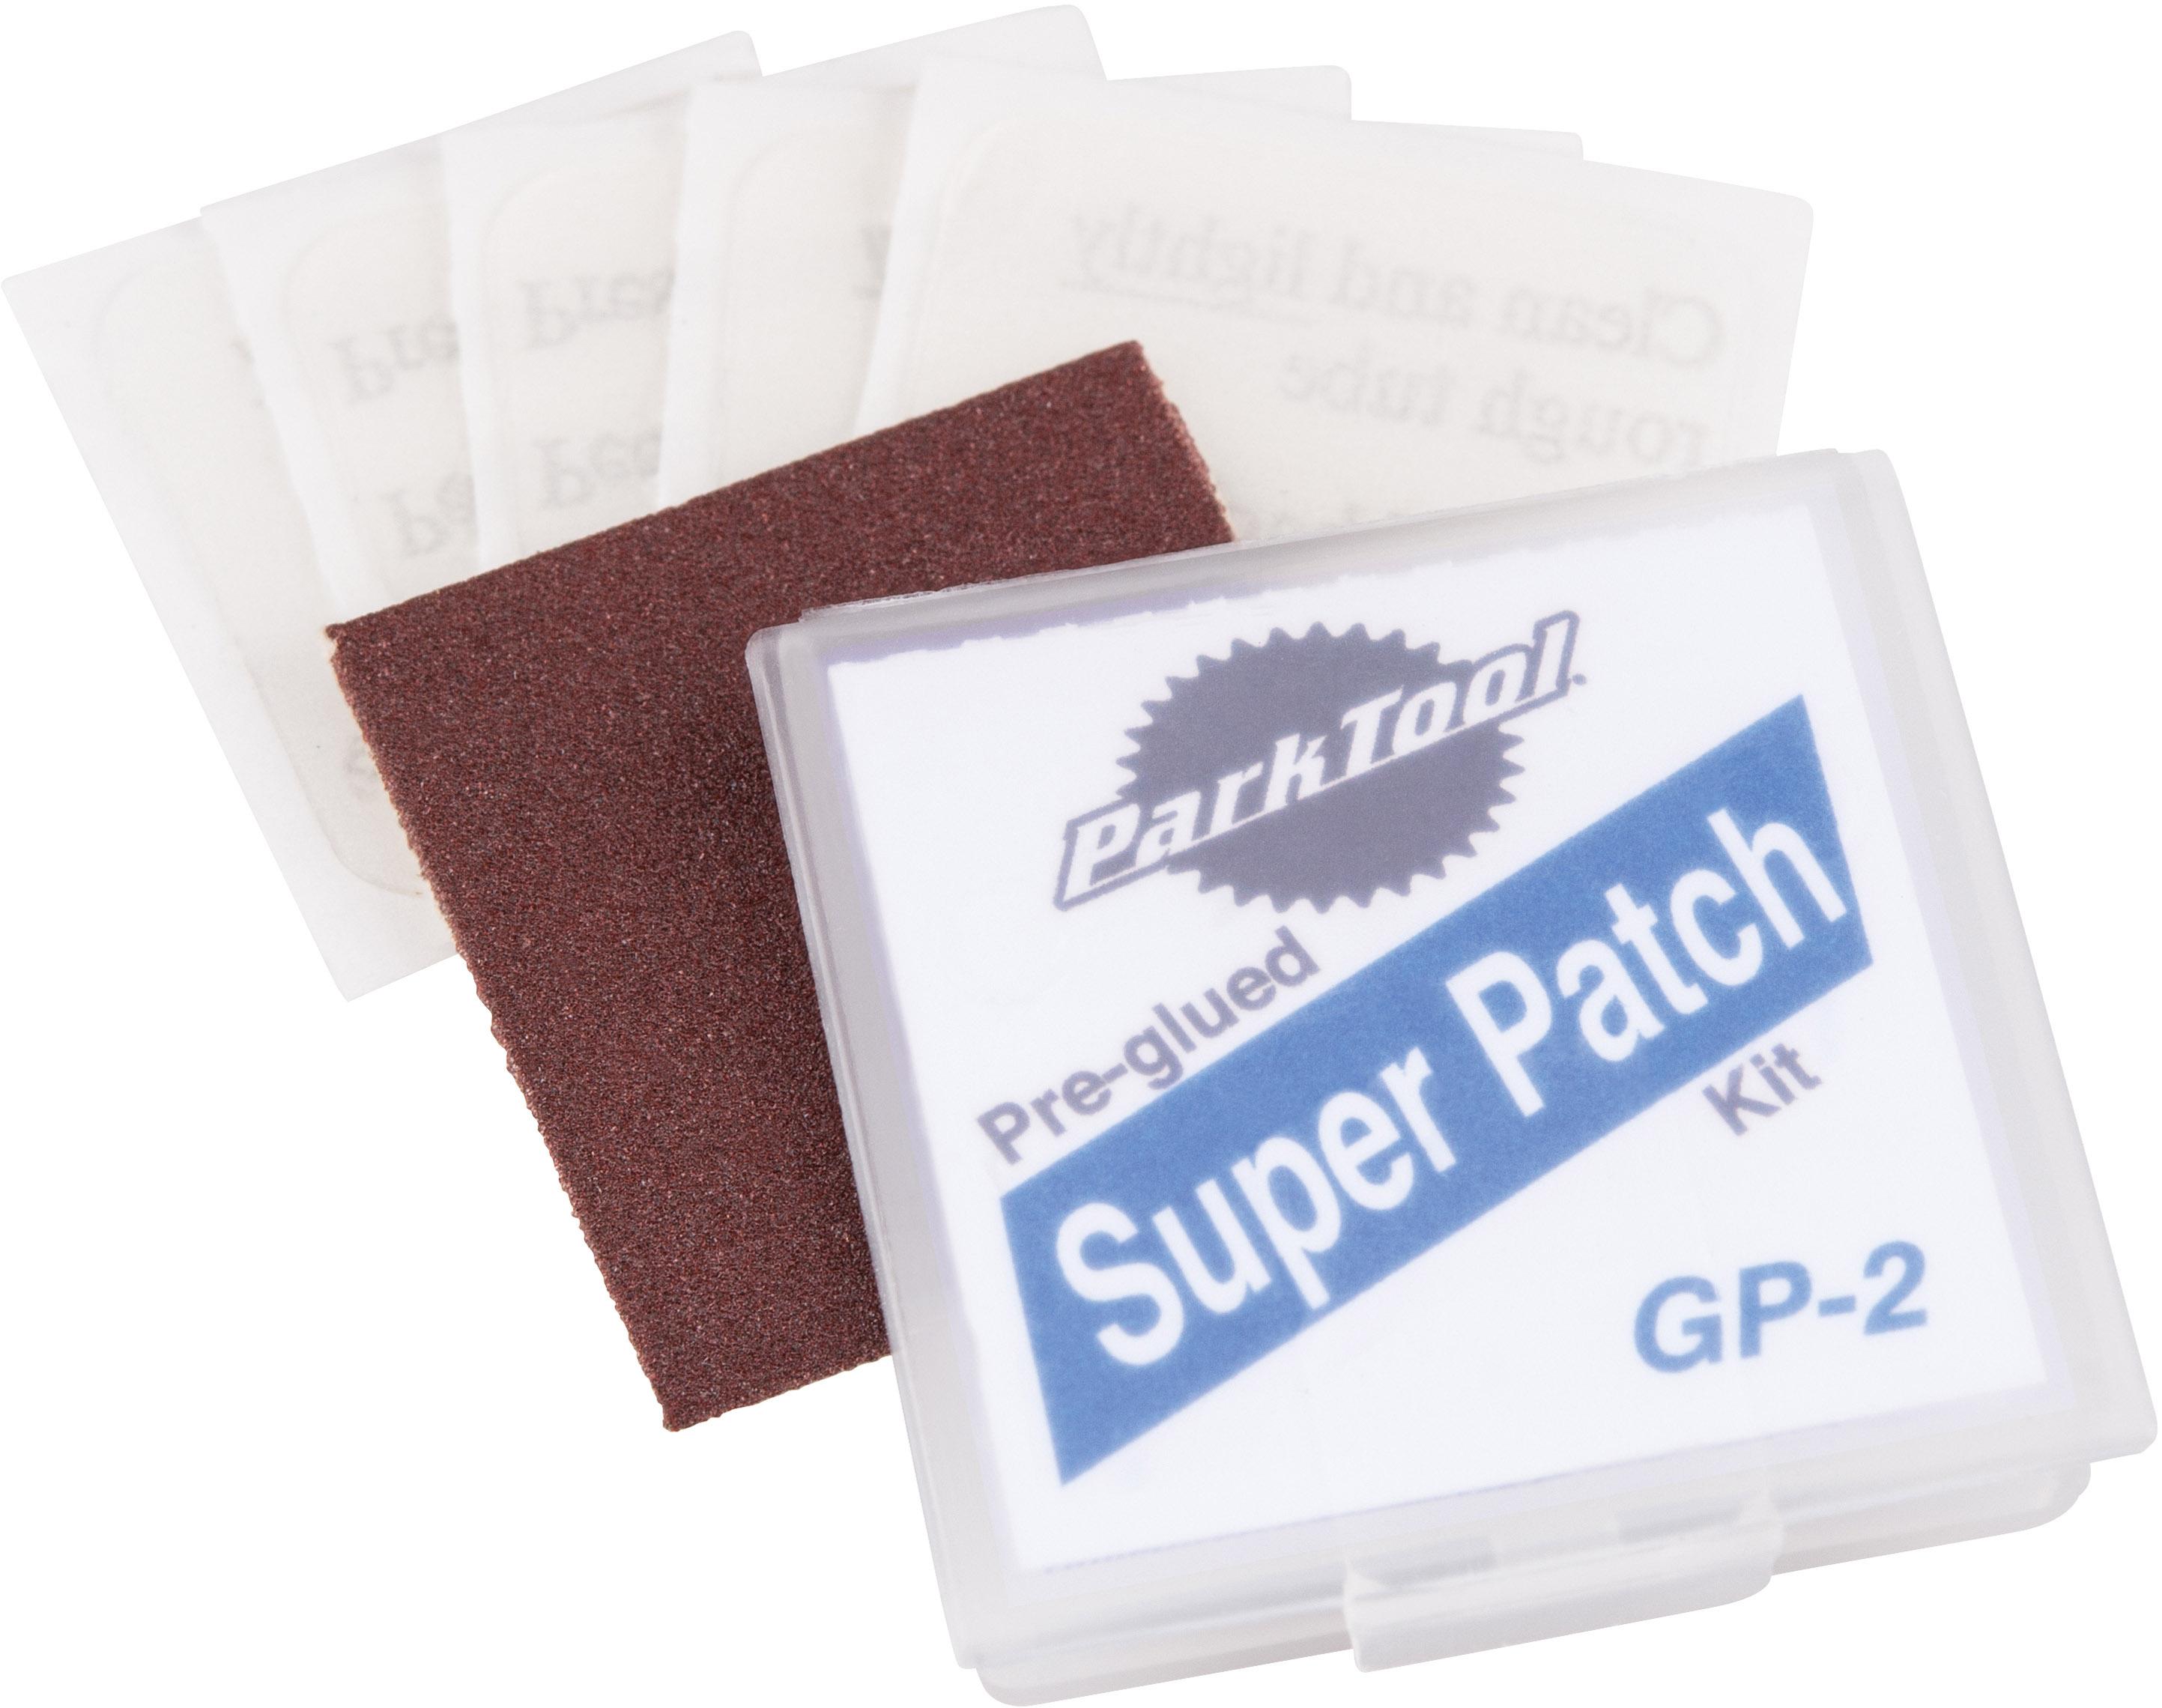 Park Tool Puncture Repair Kit Super Patch GP-2